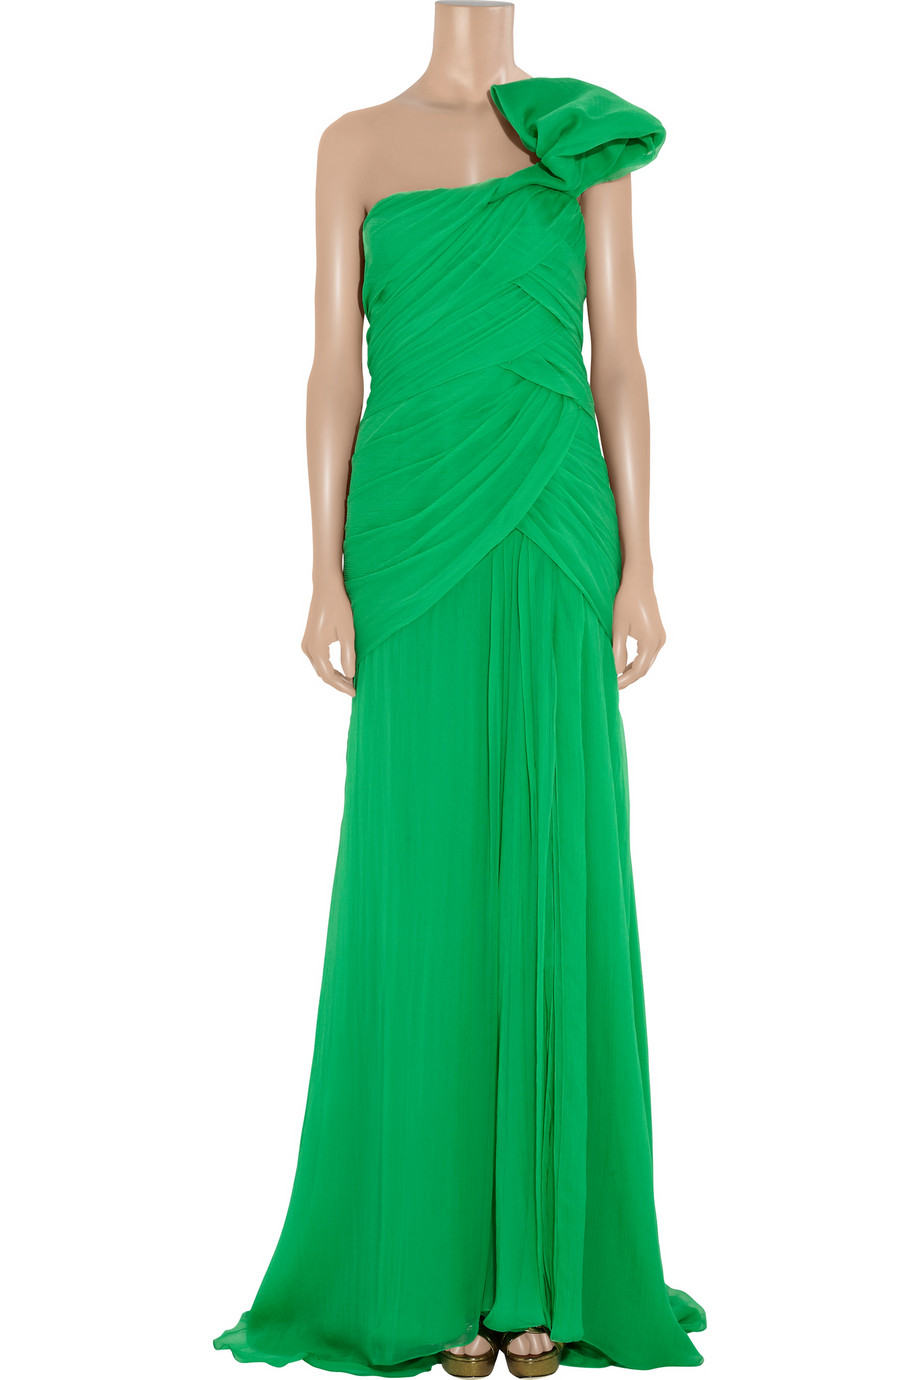 Oscar de la Renta One-shoulder Silk-chiffon Gown in Green - Lyst